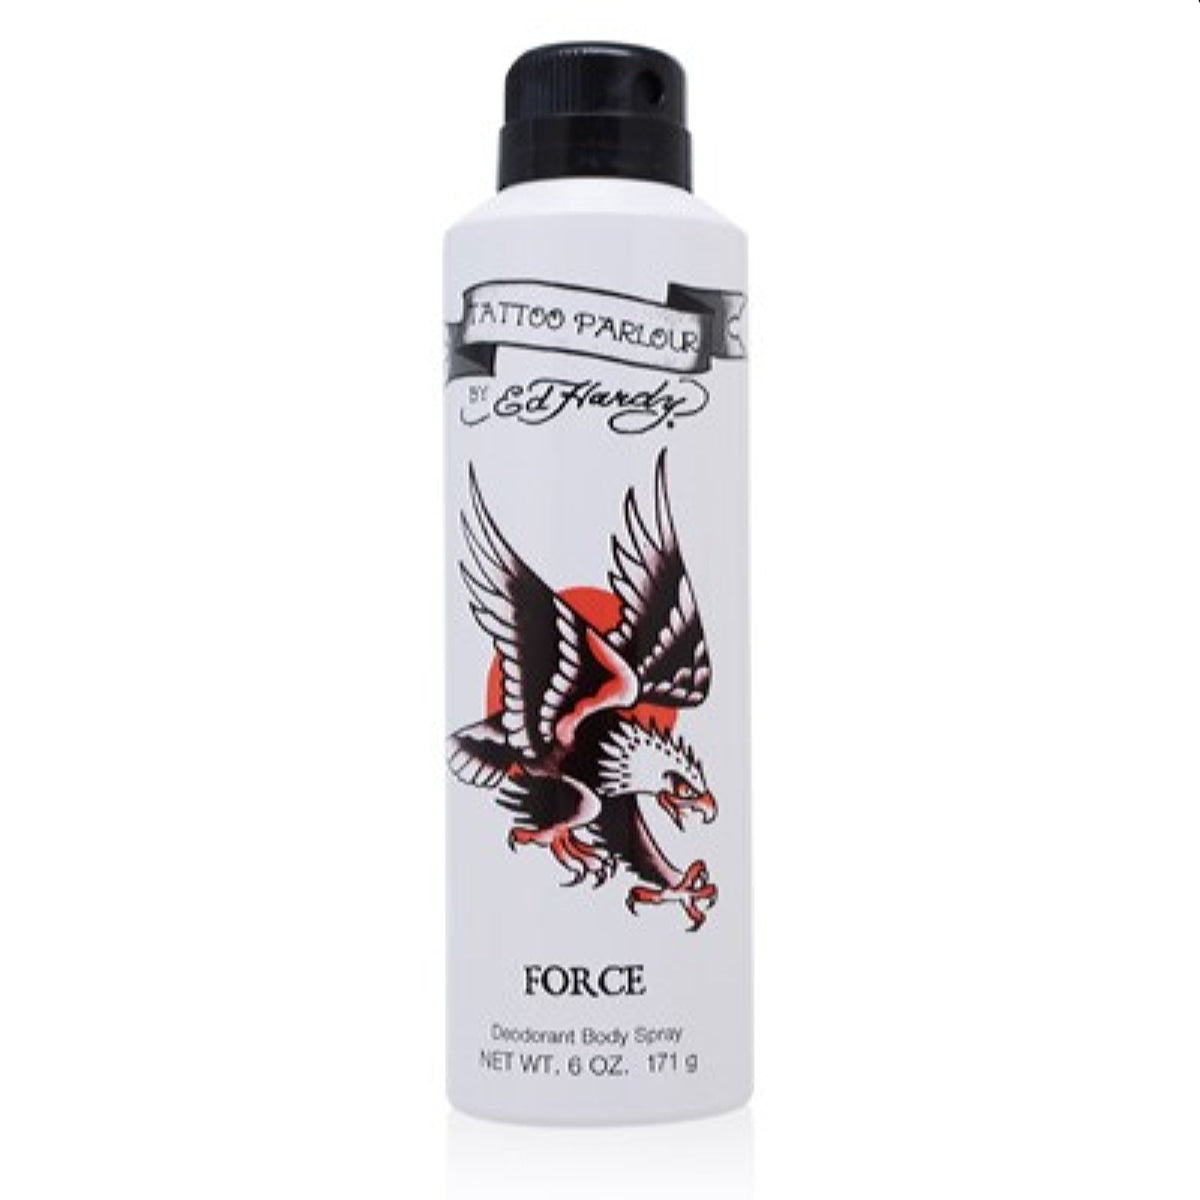 Ed Hardy Tattoo Parlour Force Christian Audigier Deodorant Spray 6.0 Oz For Men EHMB00009